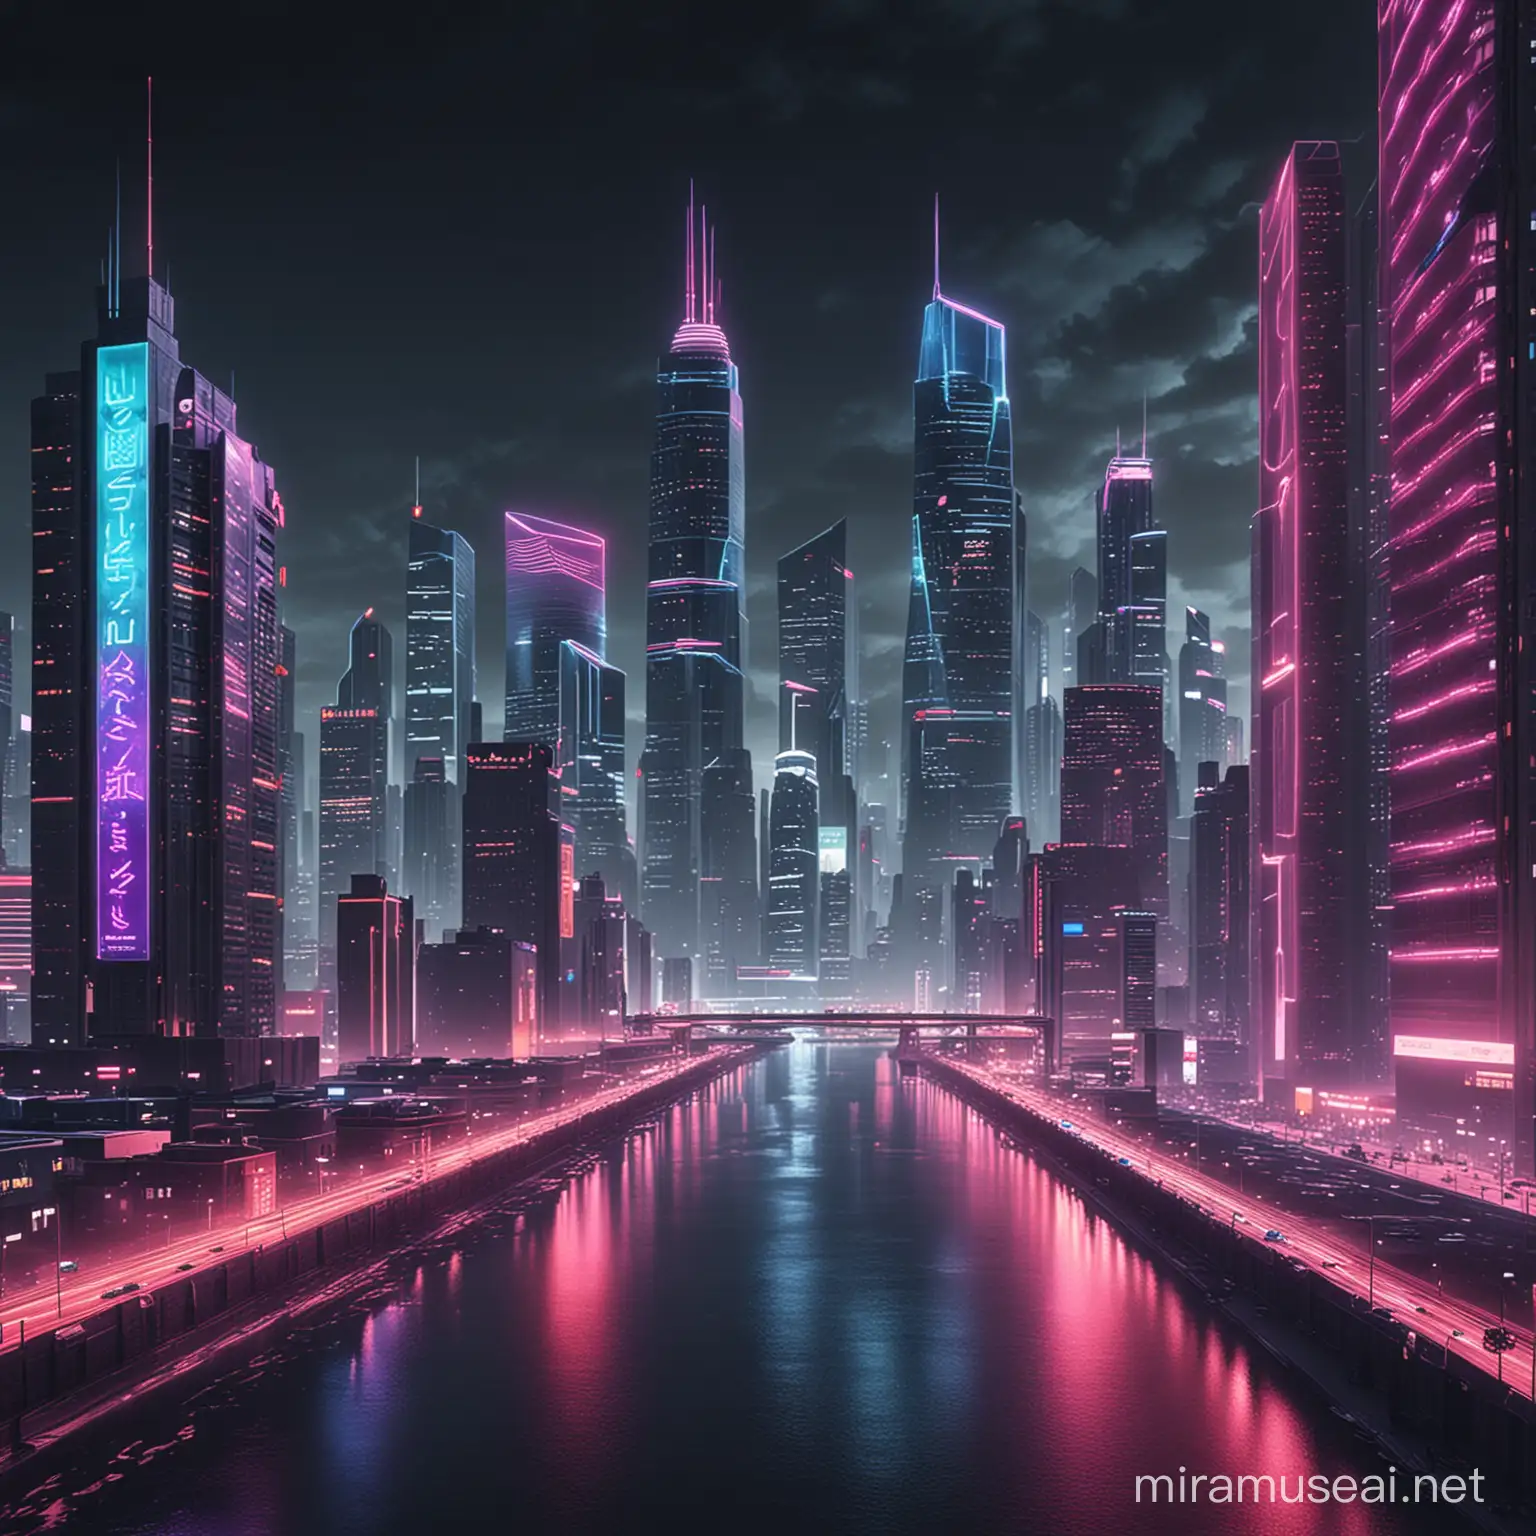 Vibrant Neon City Skyline Illuminated with Cinematic Lighting